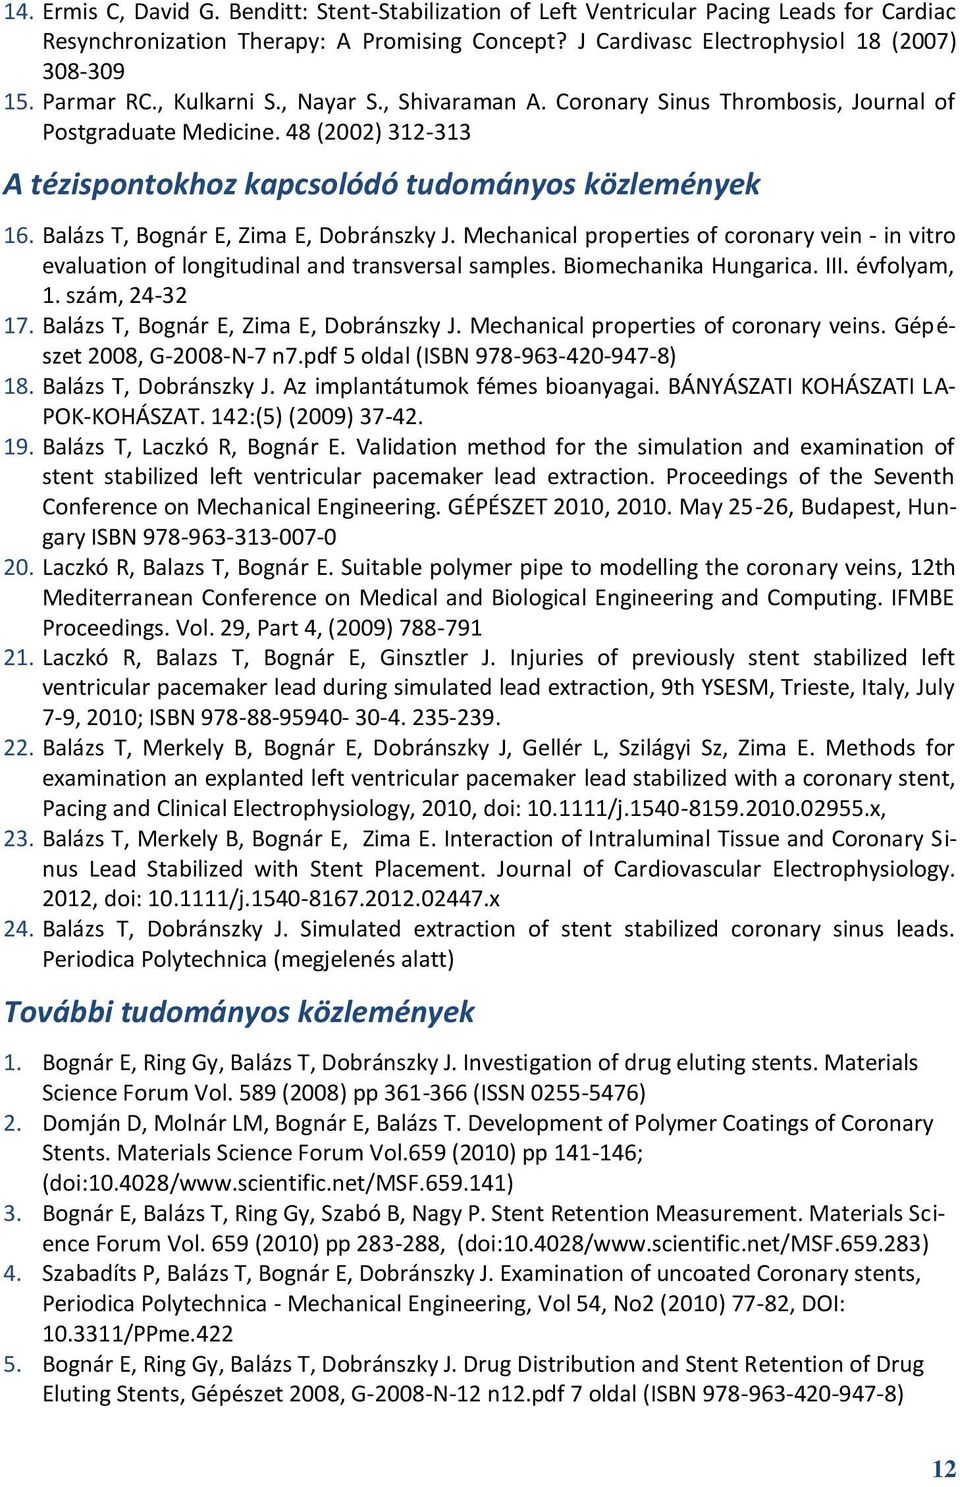 Balázs T, Bognár E, Zima E, Dobránszky J. Mechanical properties of coronary vein - in vitro evaluation of longitudinal and transversal samples. Biomechanika Hungarica. III. évfolyam, 1.